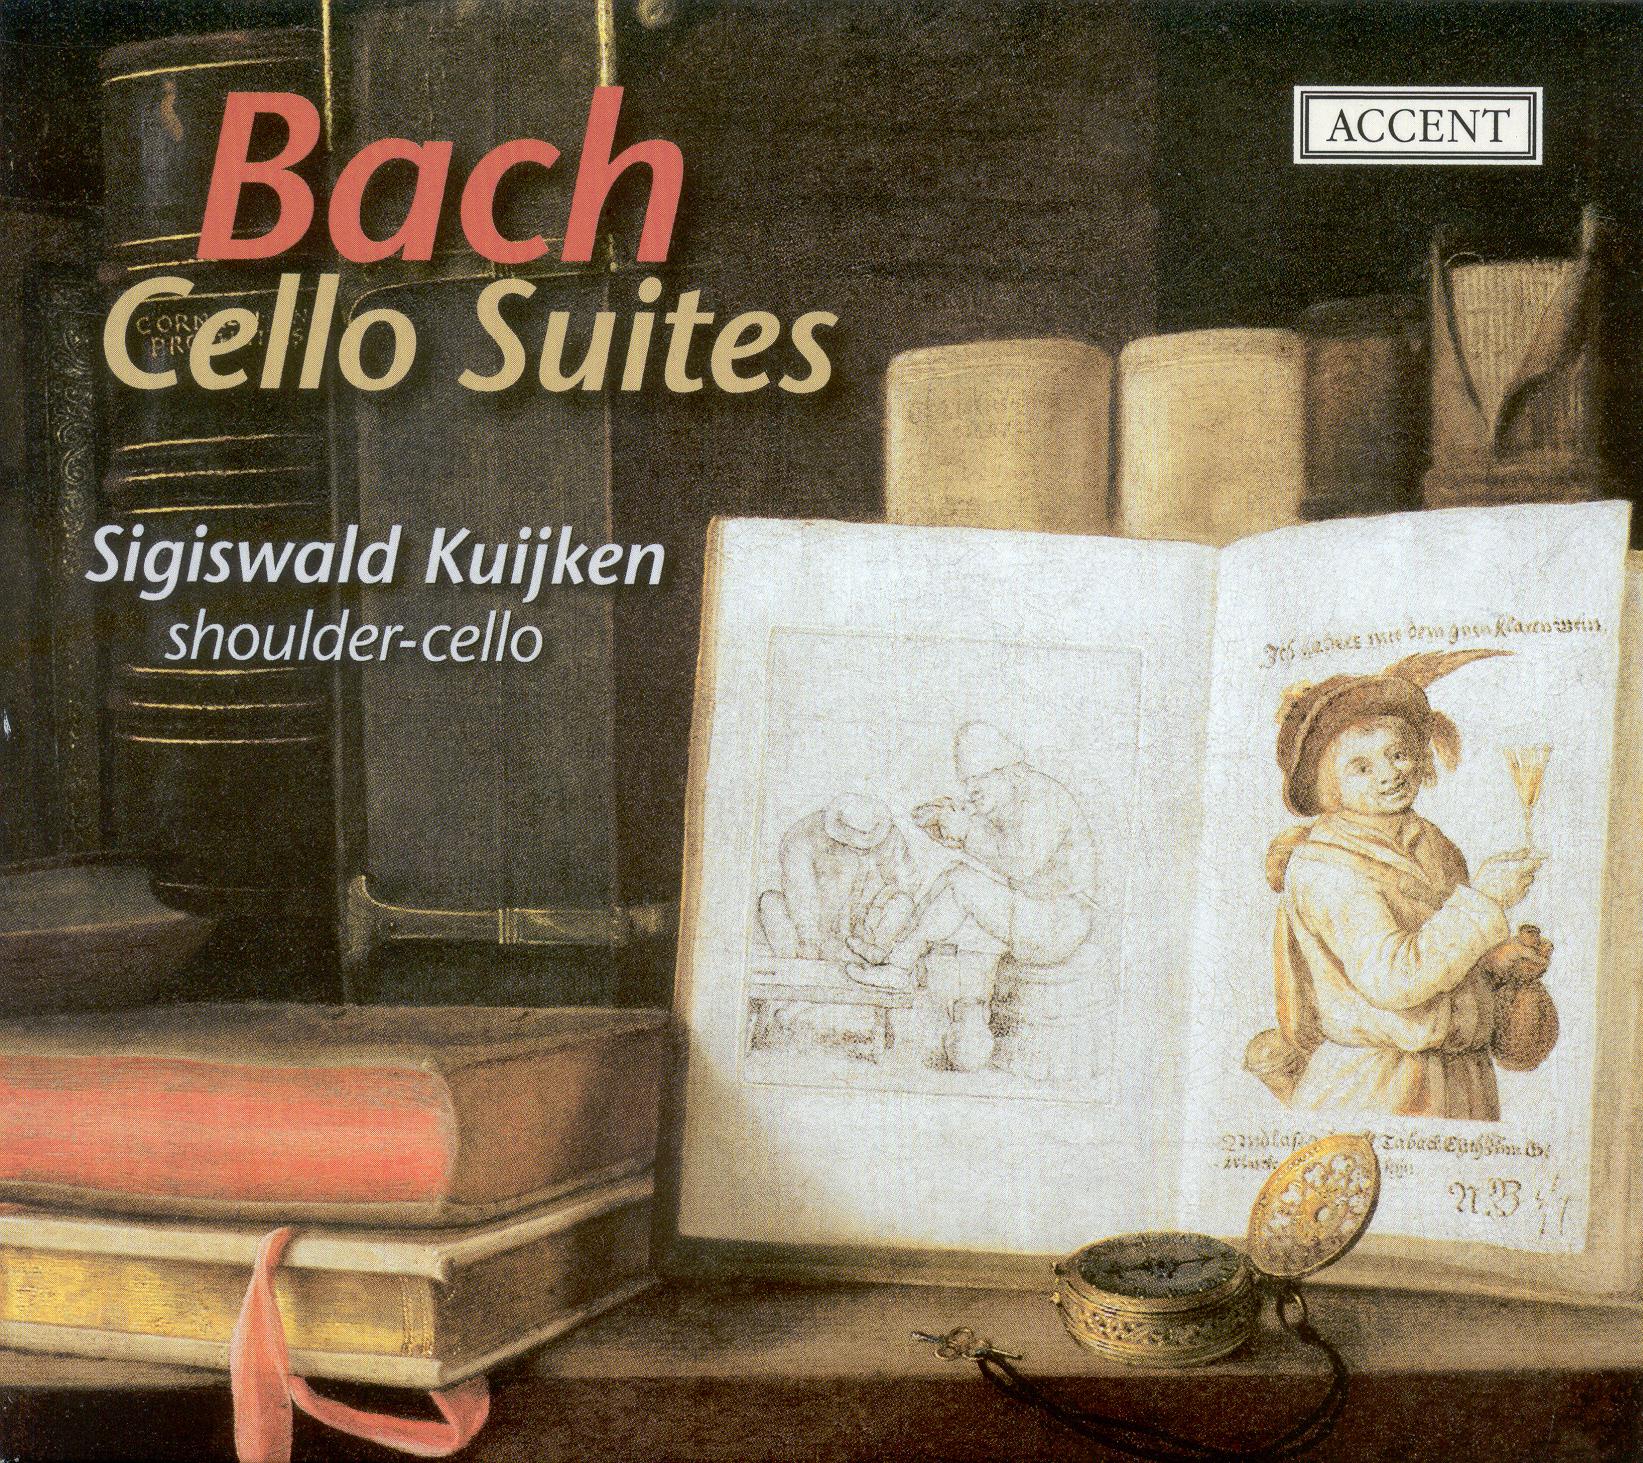 Cello Suite No. 4 in E-Flat Major, BWV 1010: VI. Gigue